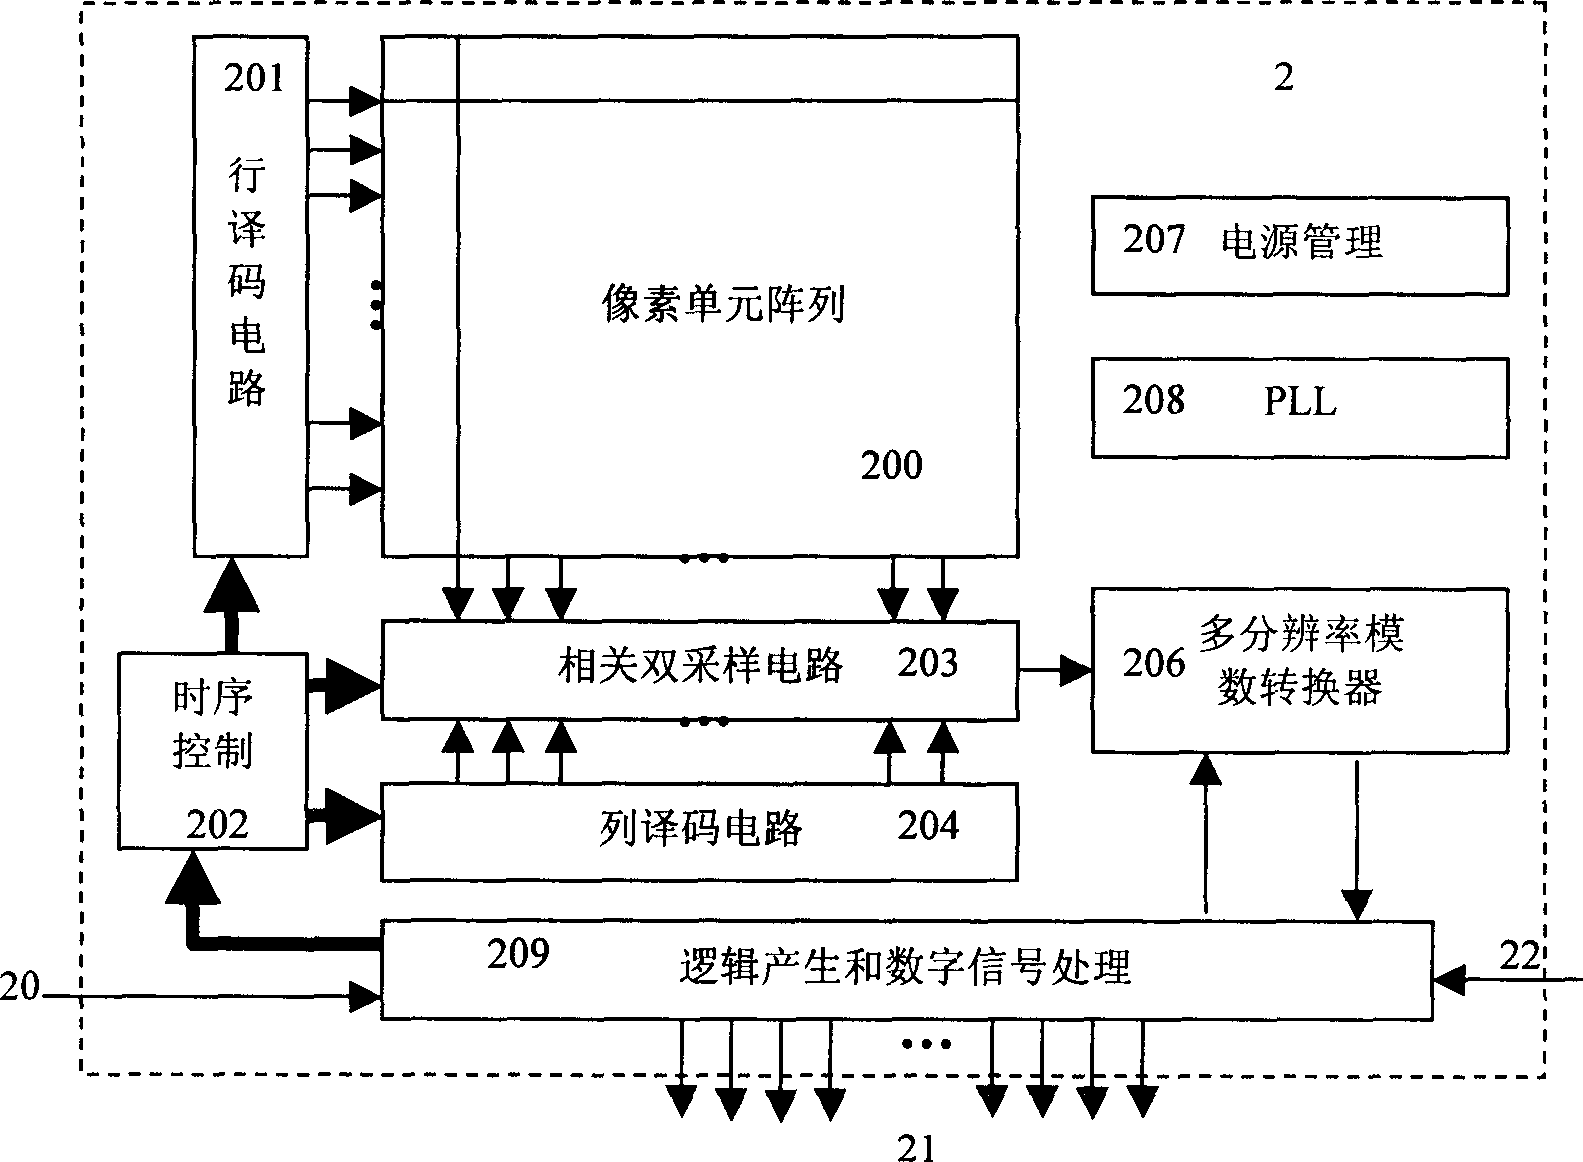 CMOS image transducer